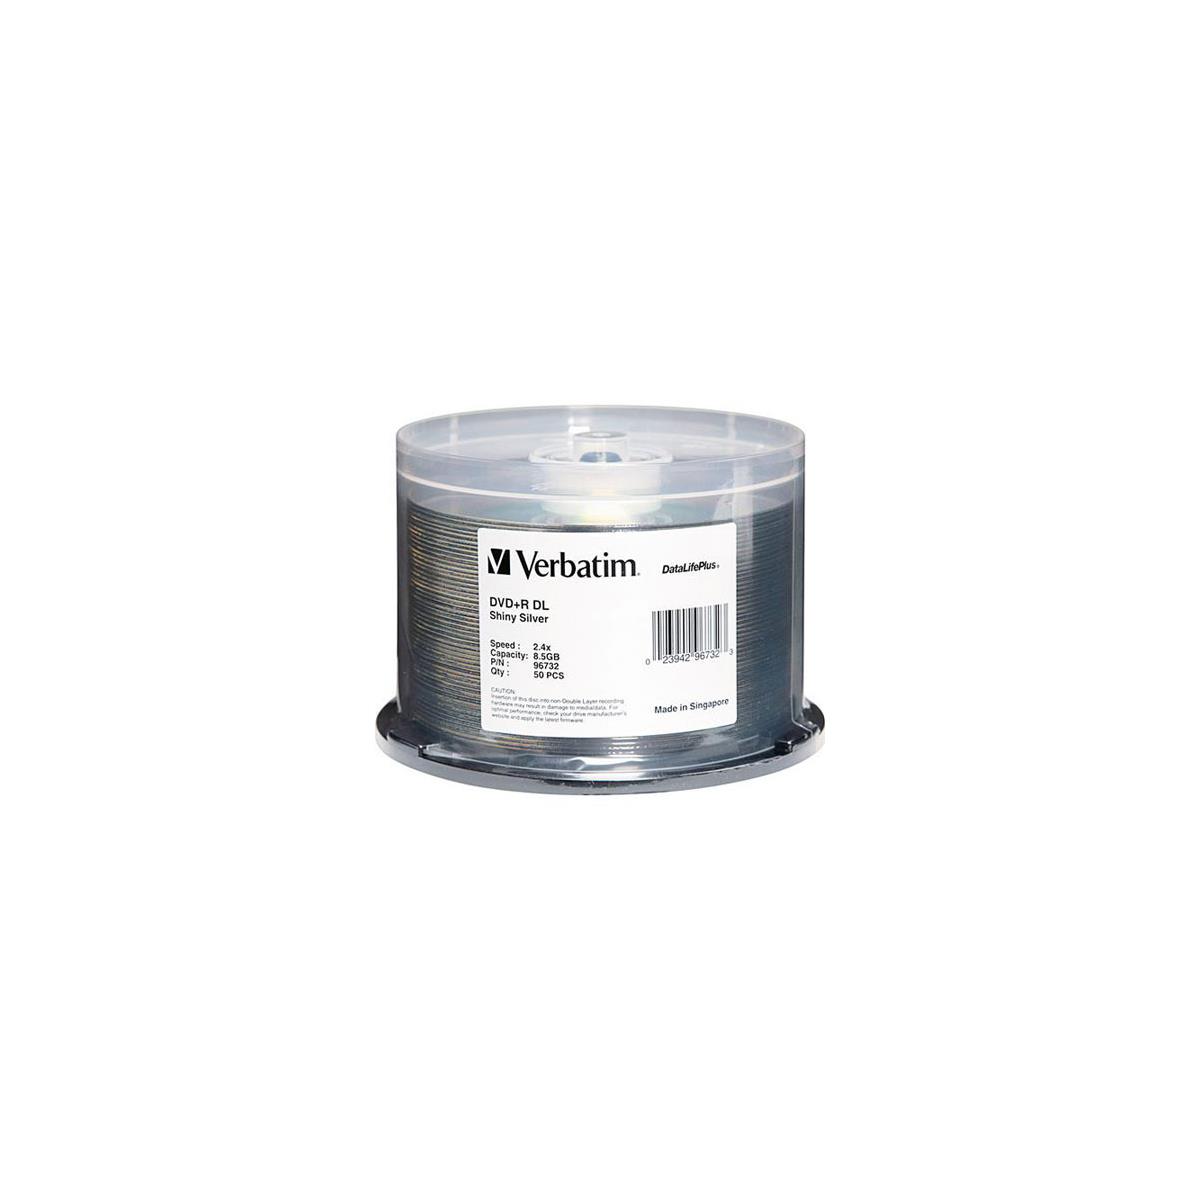 

Verbatim 8.5GB 8x DVD+R DL DataLifePlus Silver Recordable Disc, 50 Pack Spindle